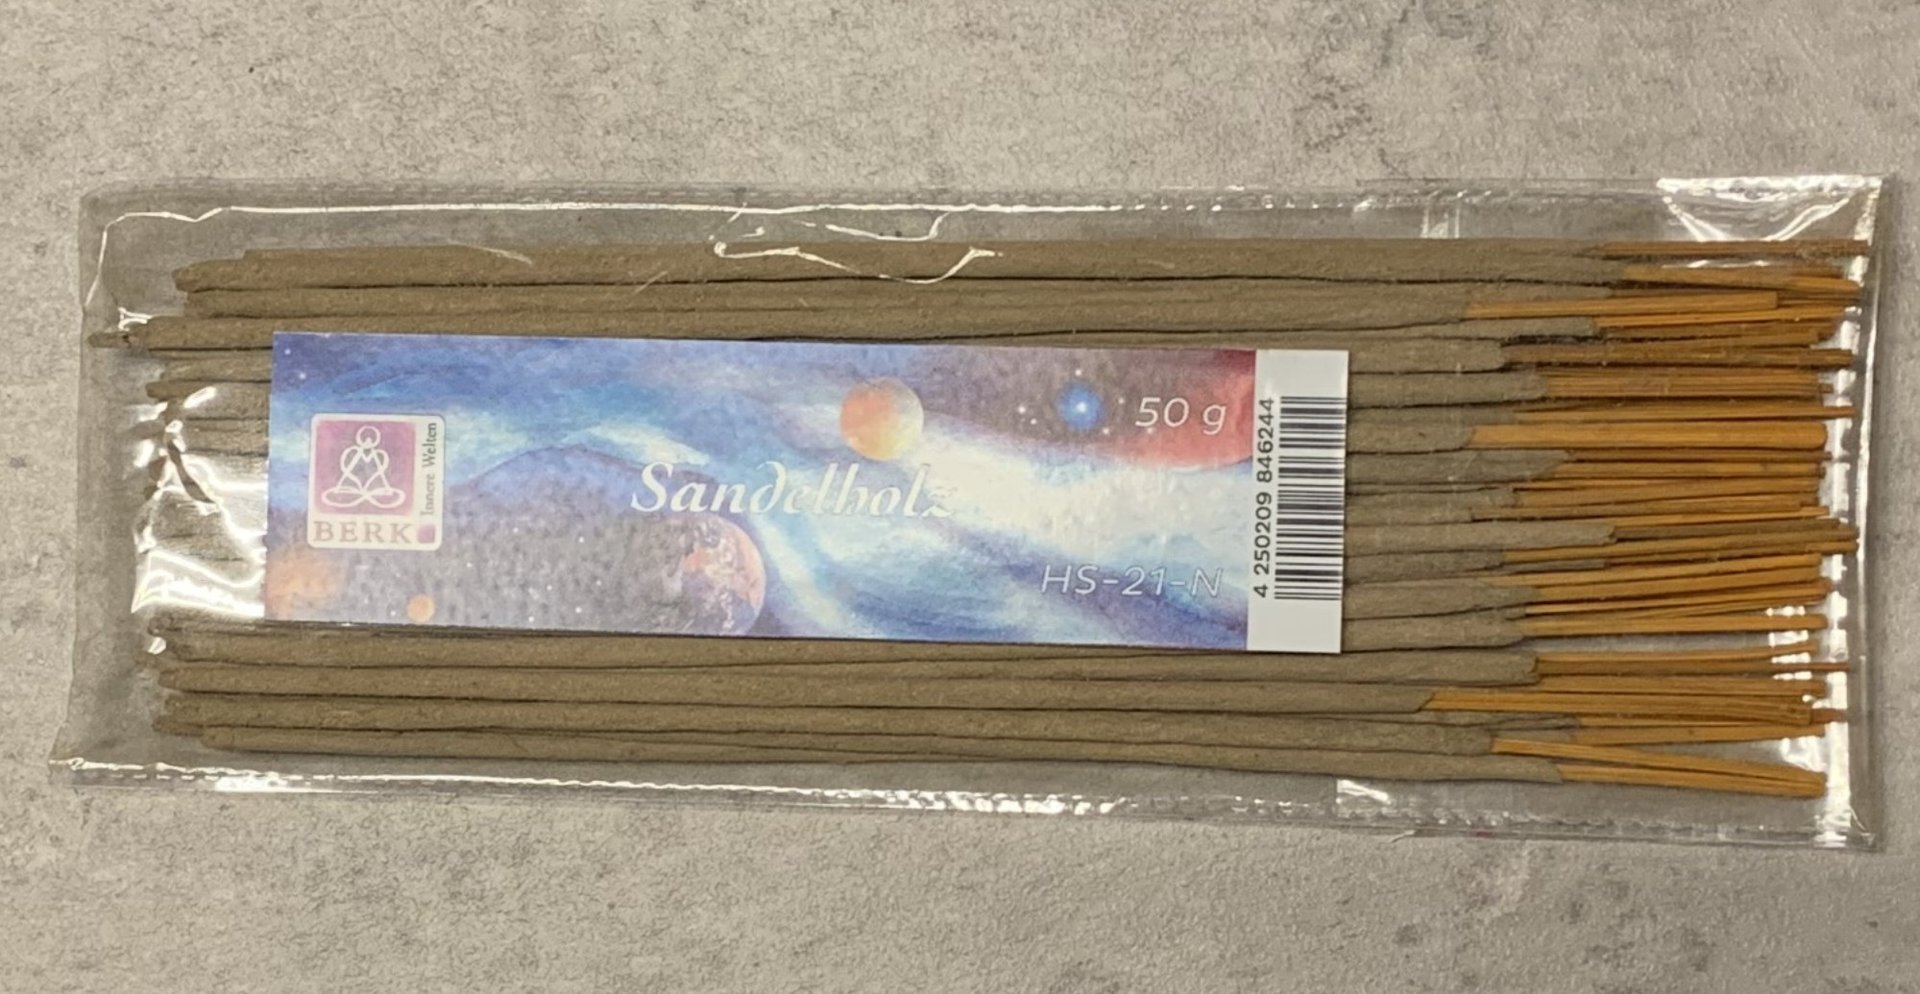 Sandelholz - Blue Line - Holy Smokes 50 g Großpackung (10,80€/100g)